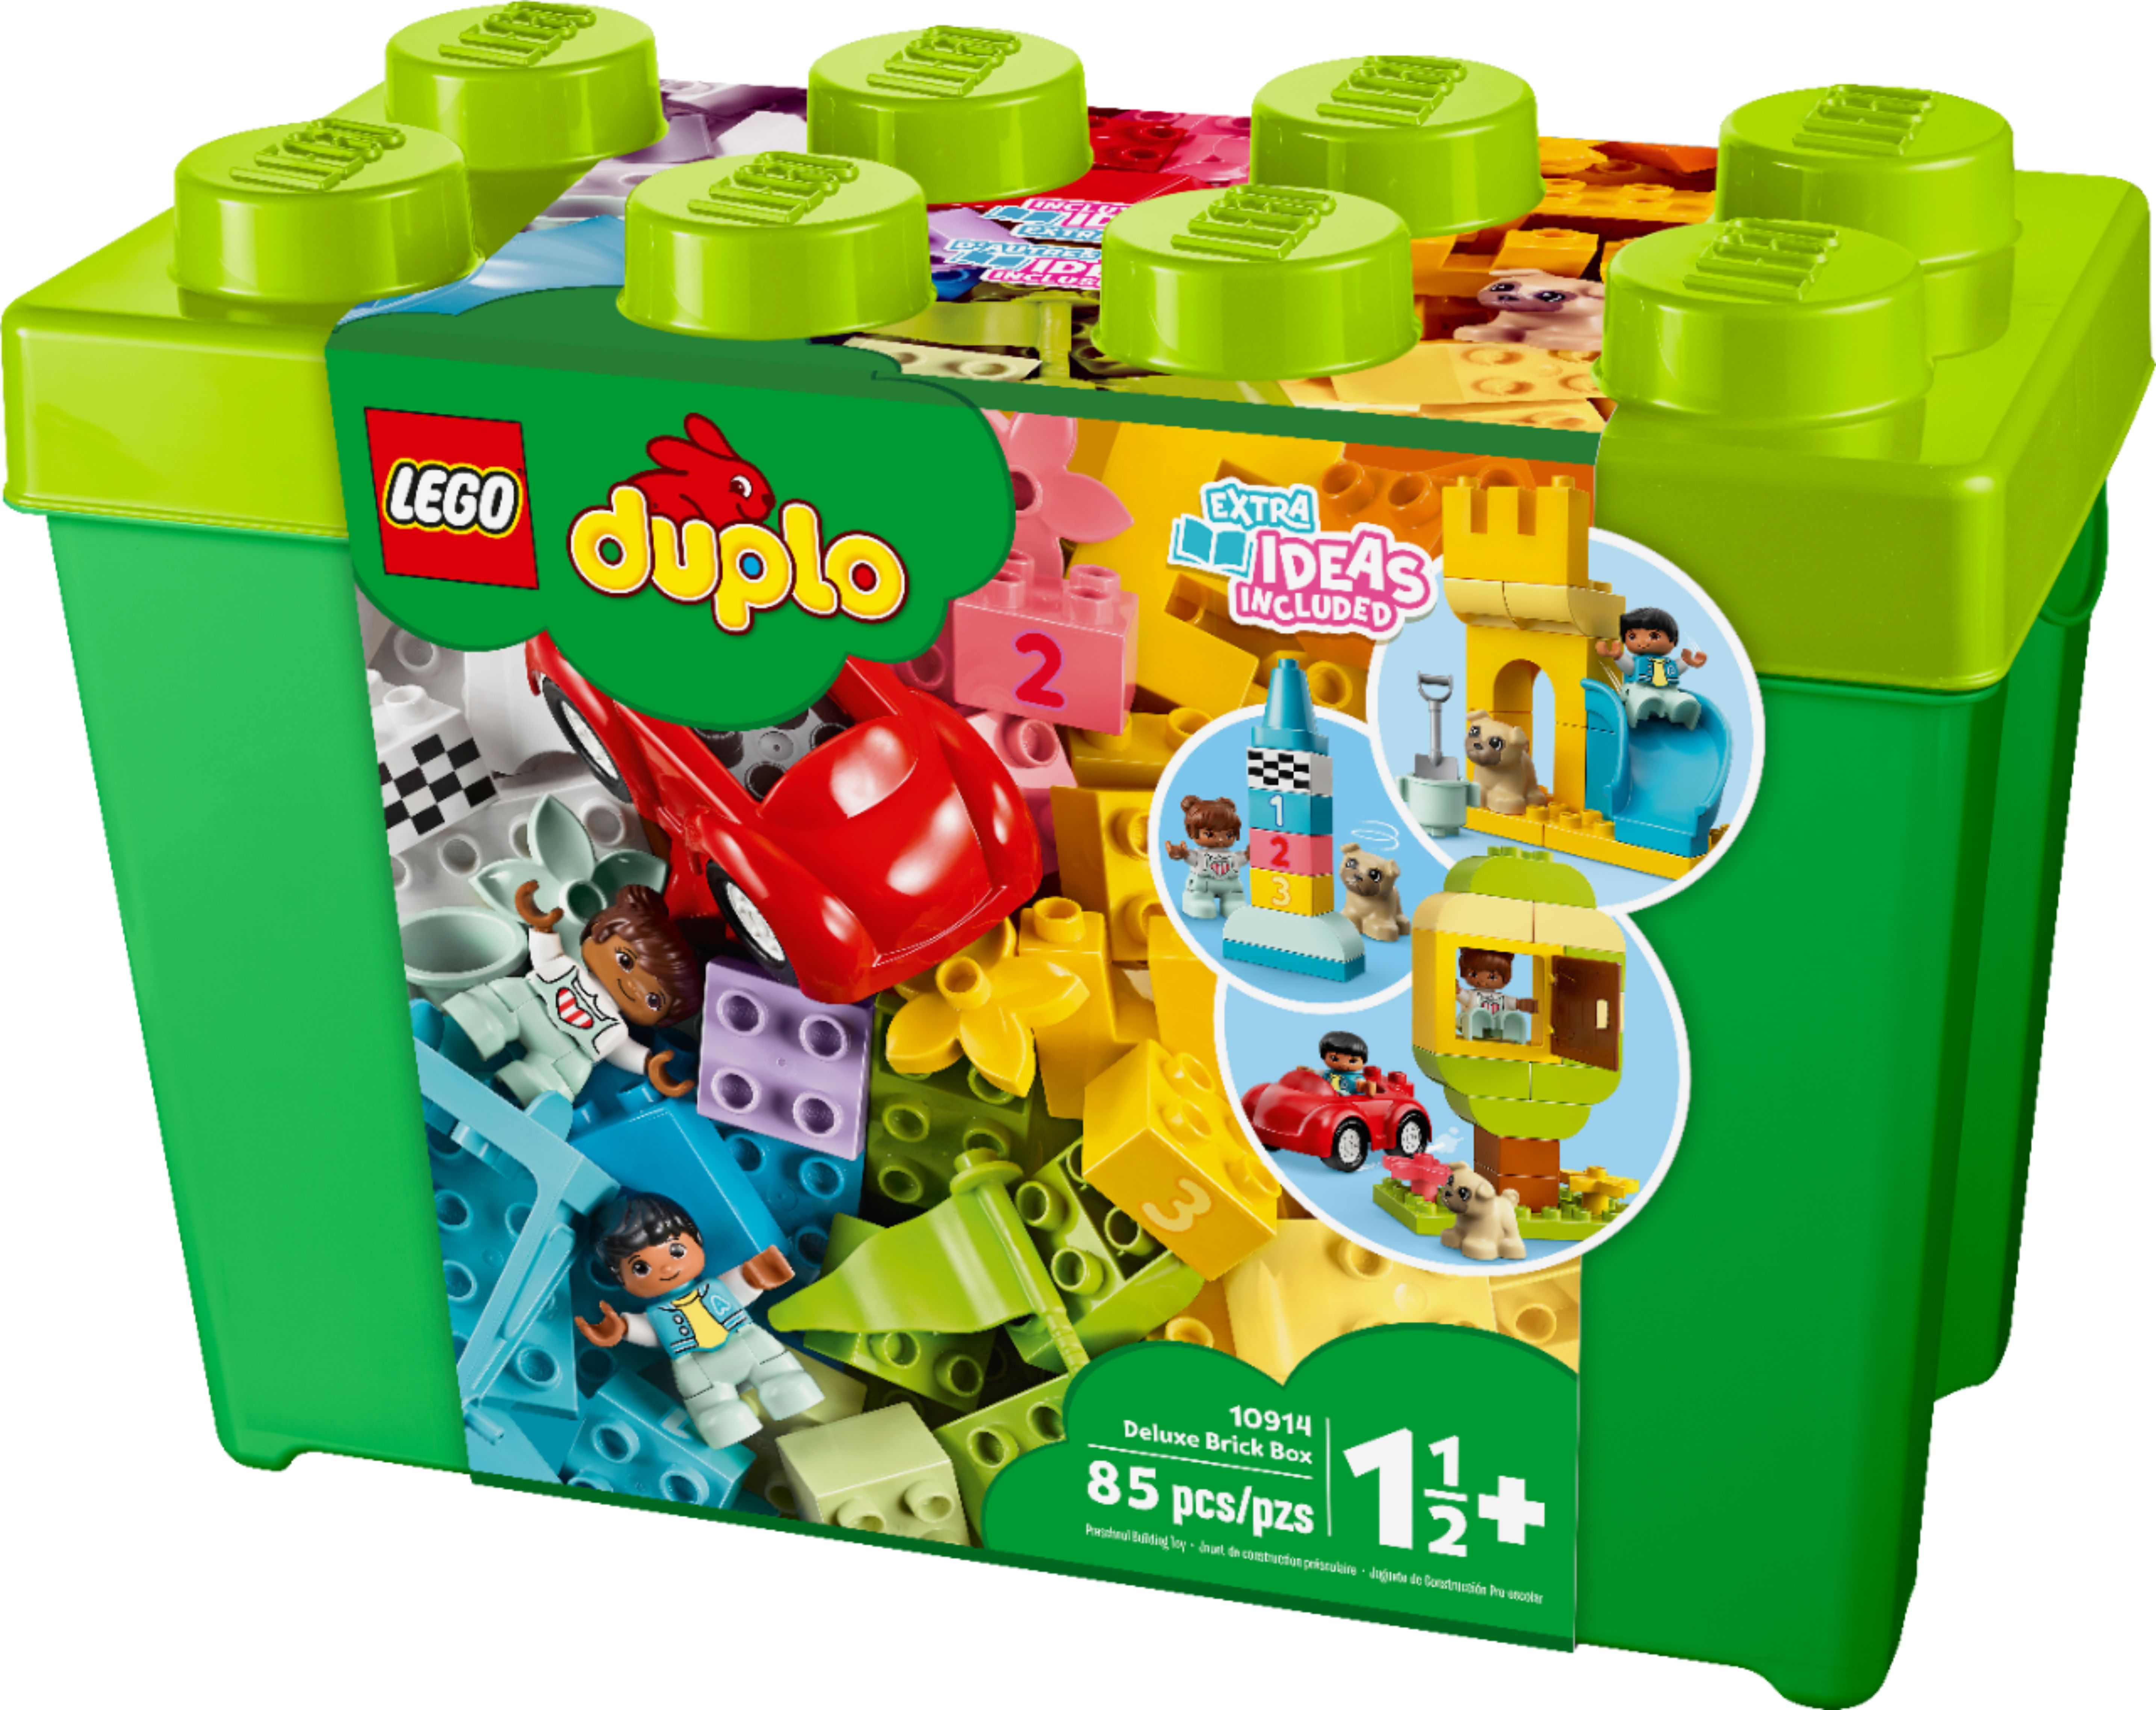 Buy LEGO® DUPLO® Classic Deluxe Brick Box 10914 Building Toy (85